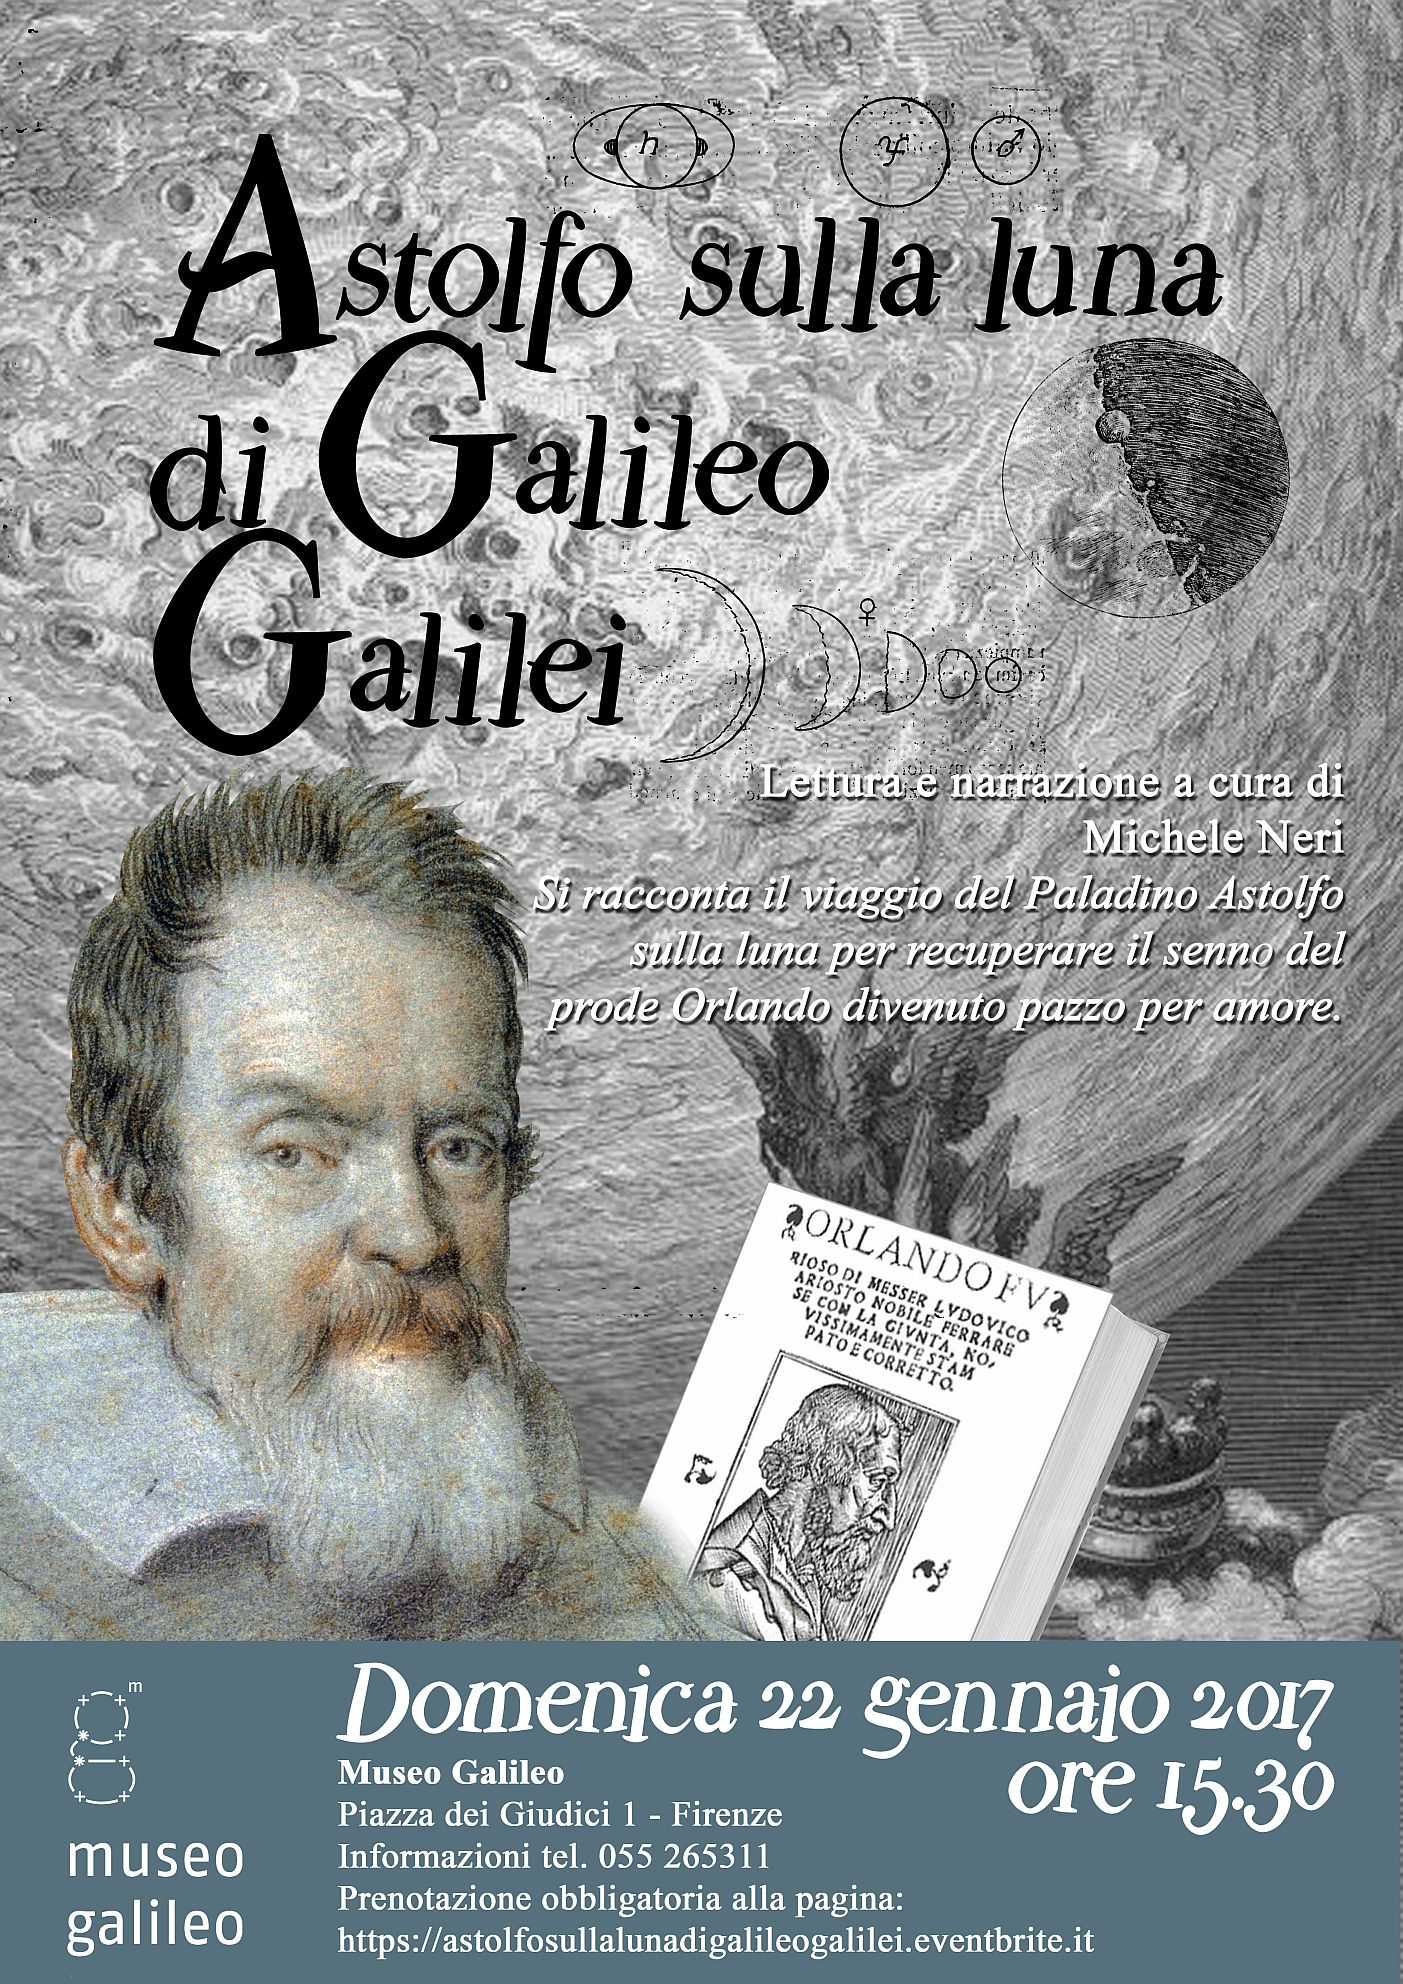 Astolfo sulla luna di Galileo Galilei